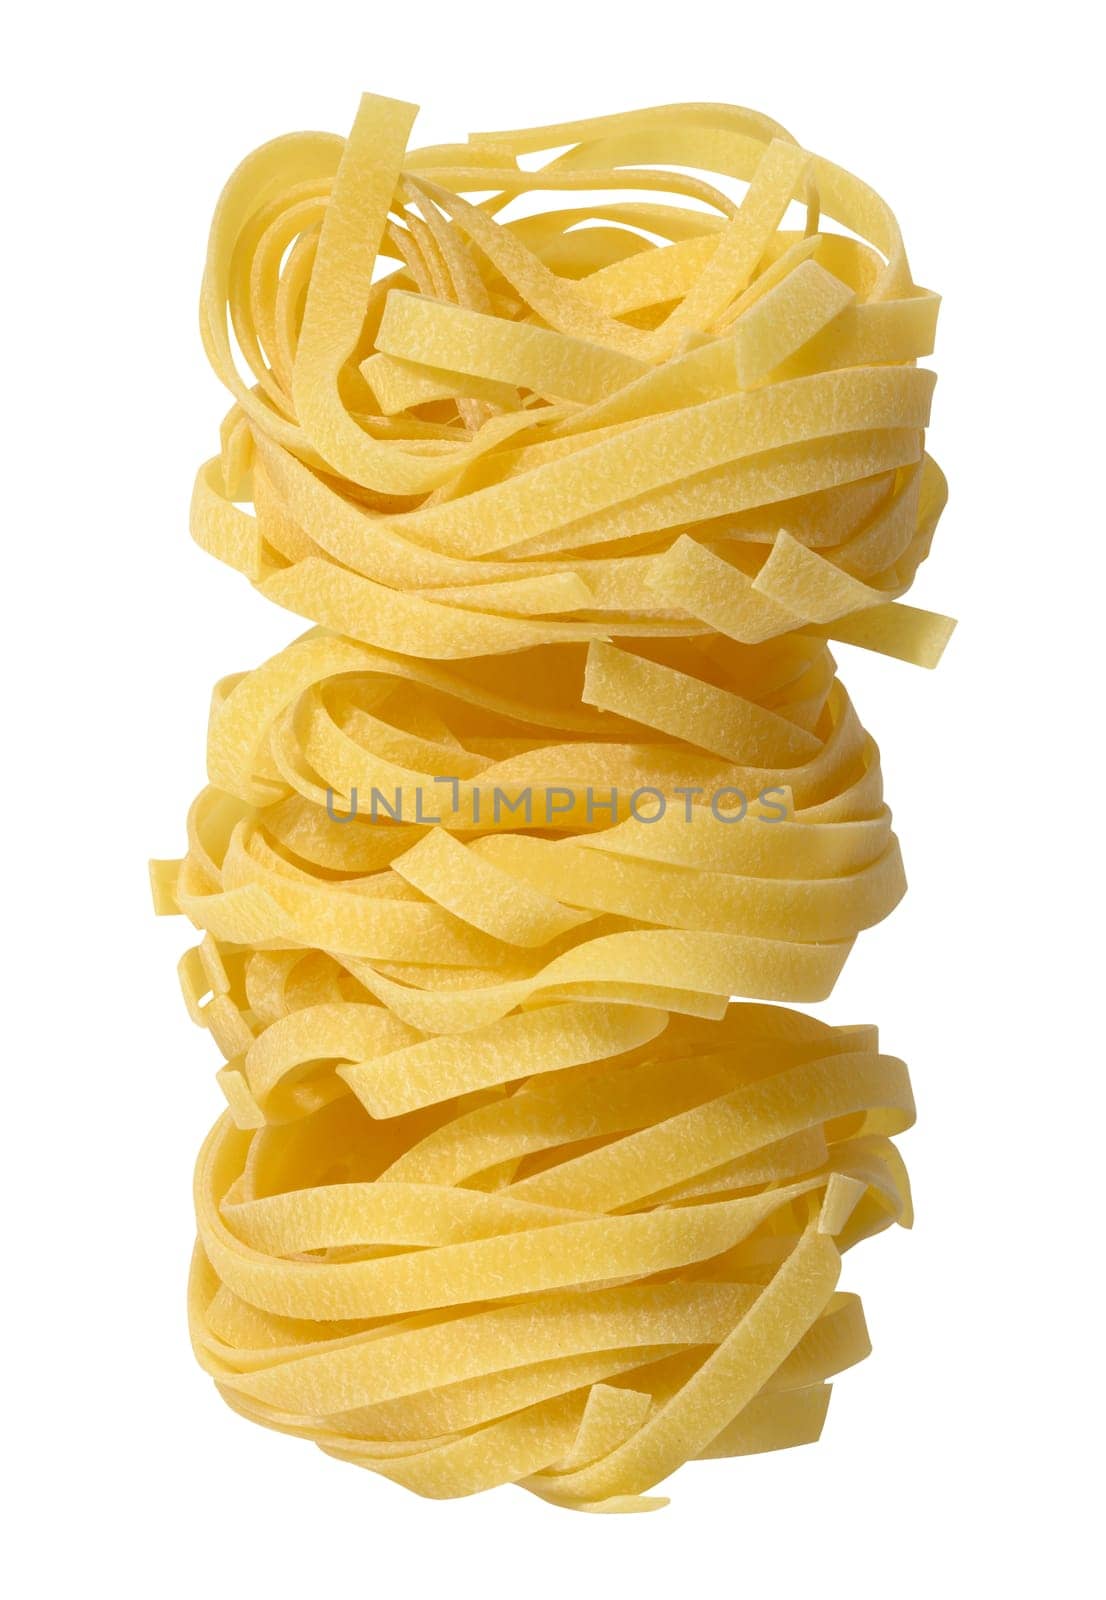 Twisted nest of raw pasta on white background, close up